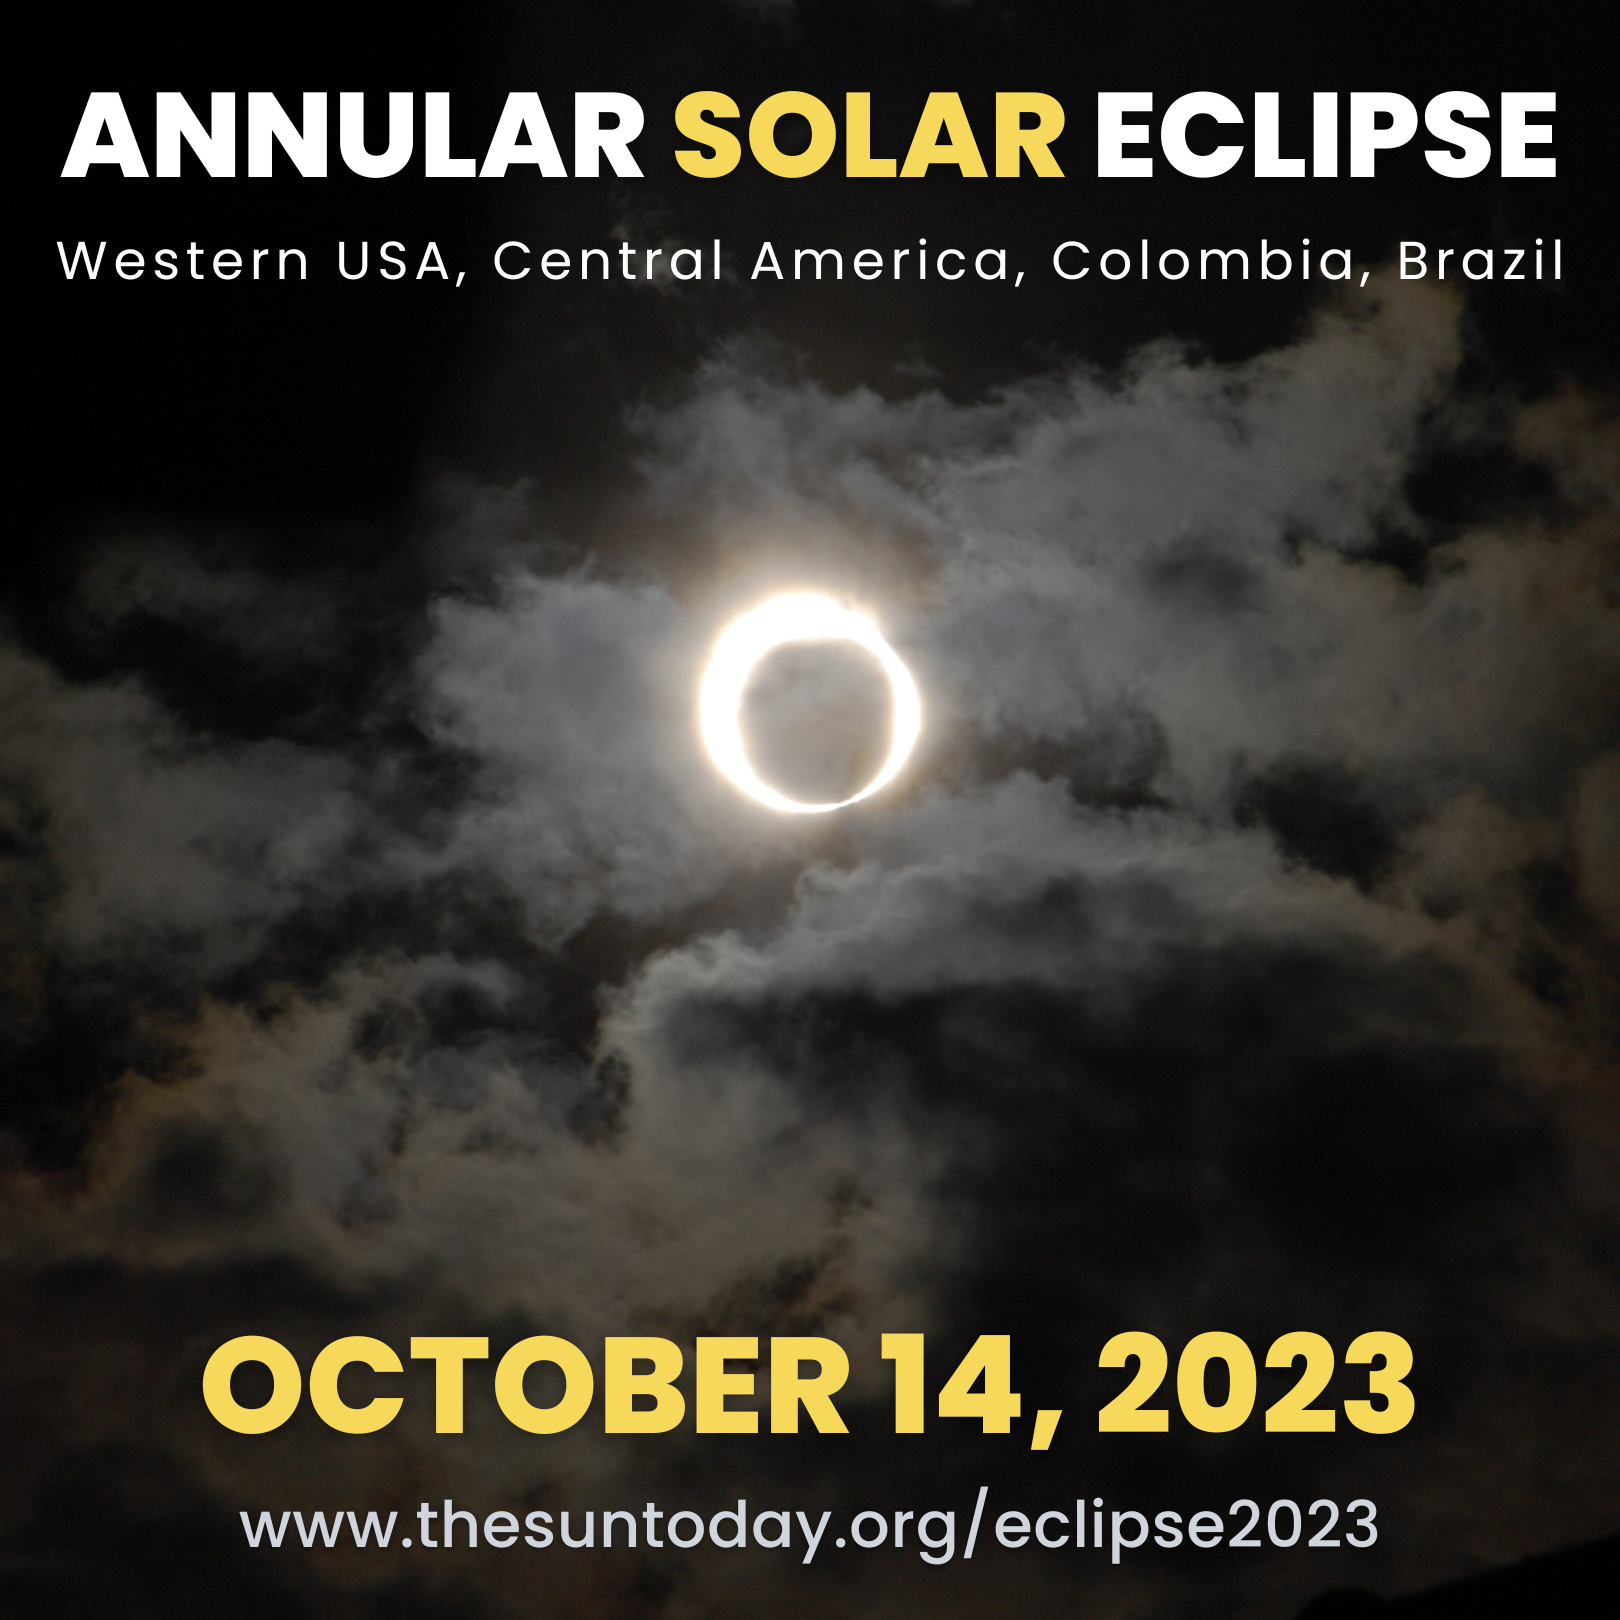 Annular Solar Eclipse - October 14, 2023